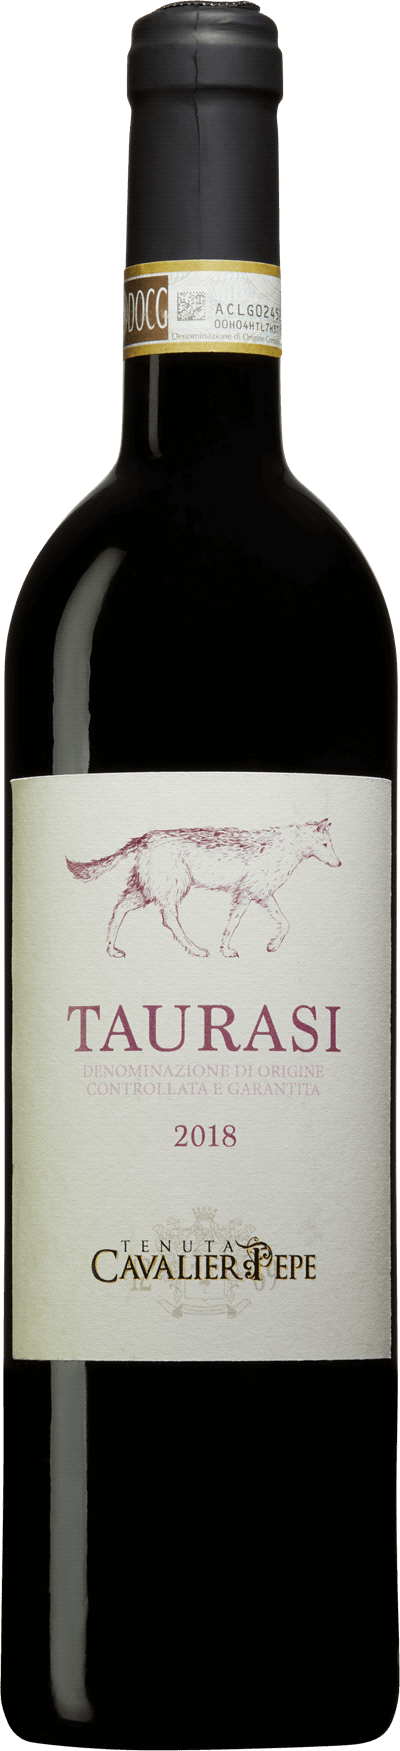 winetable_its_a_bargain_taurasi